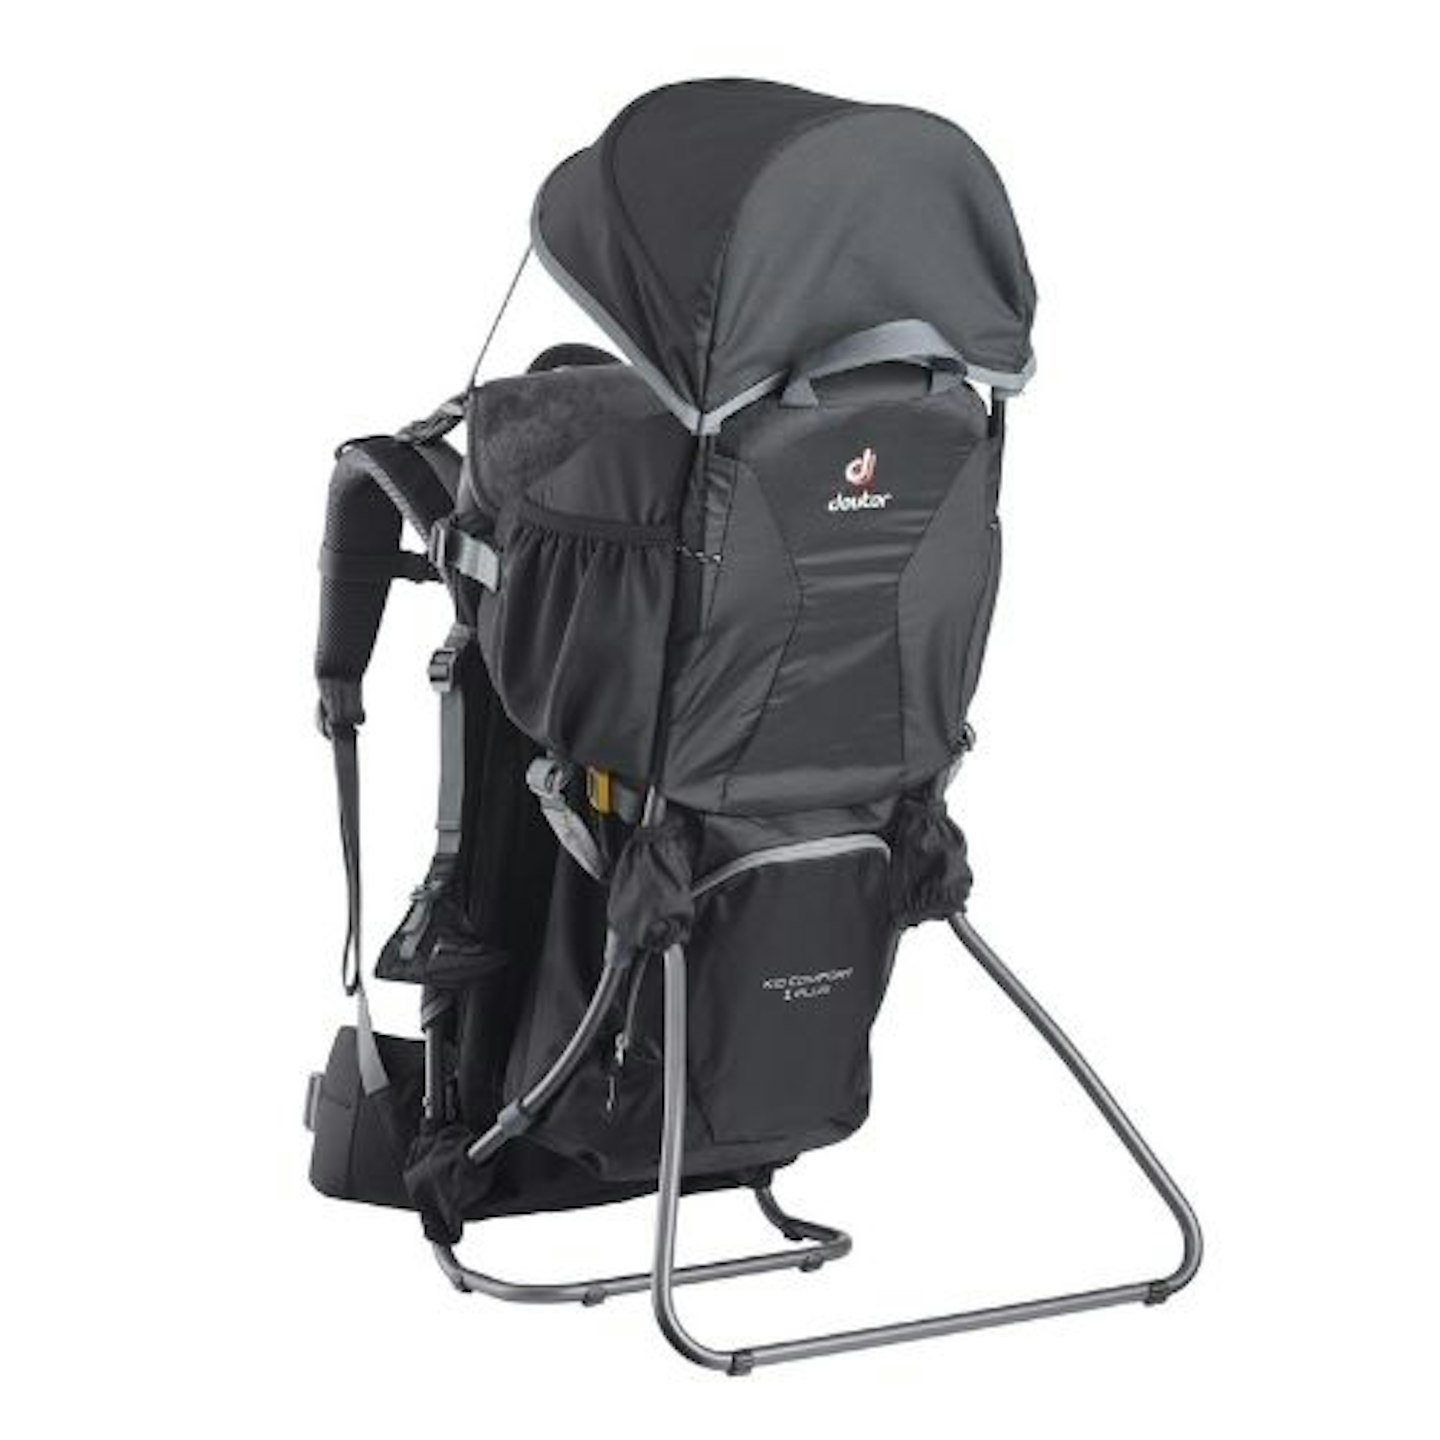 The best baby carrier backpacks: Kids Baby Carrier Deuter Comfort Plus